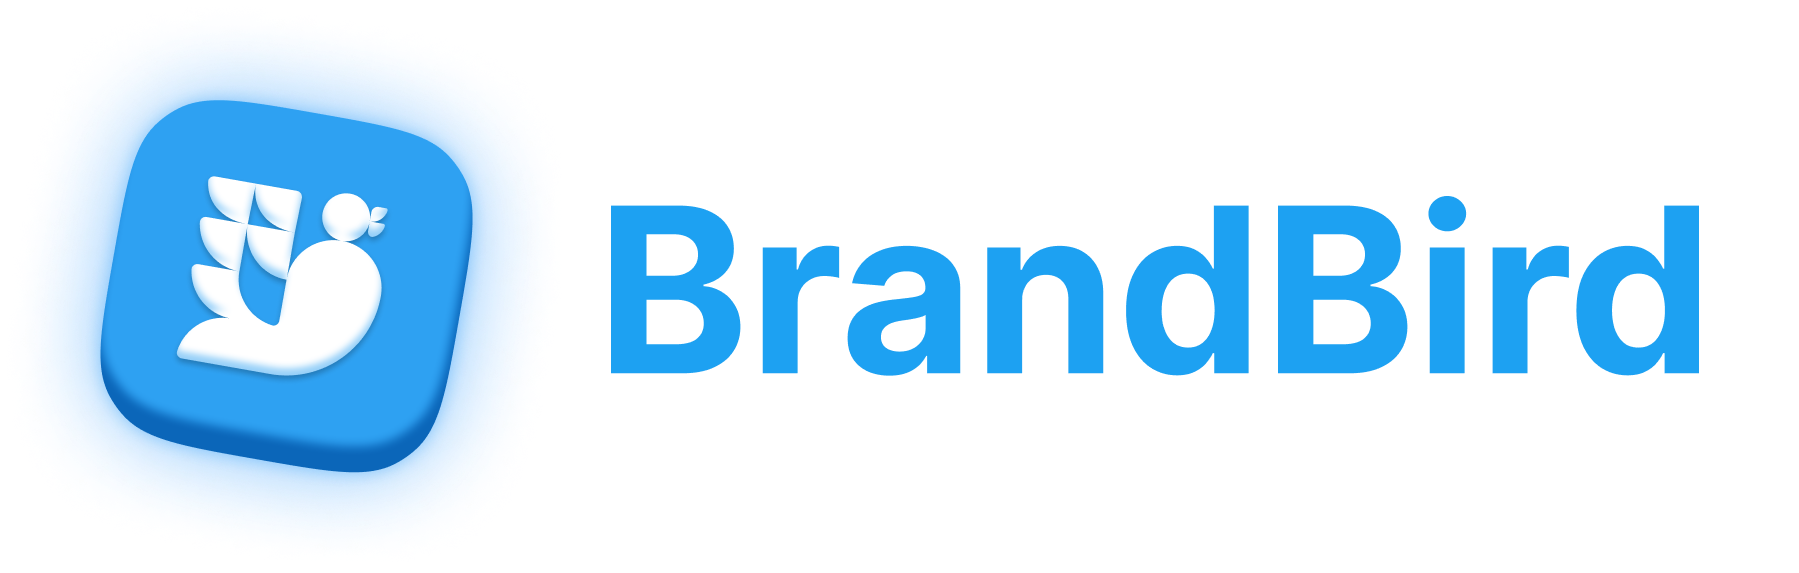 BrandBird logo full 3D blue